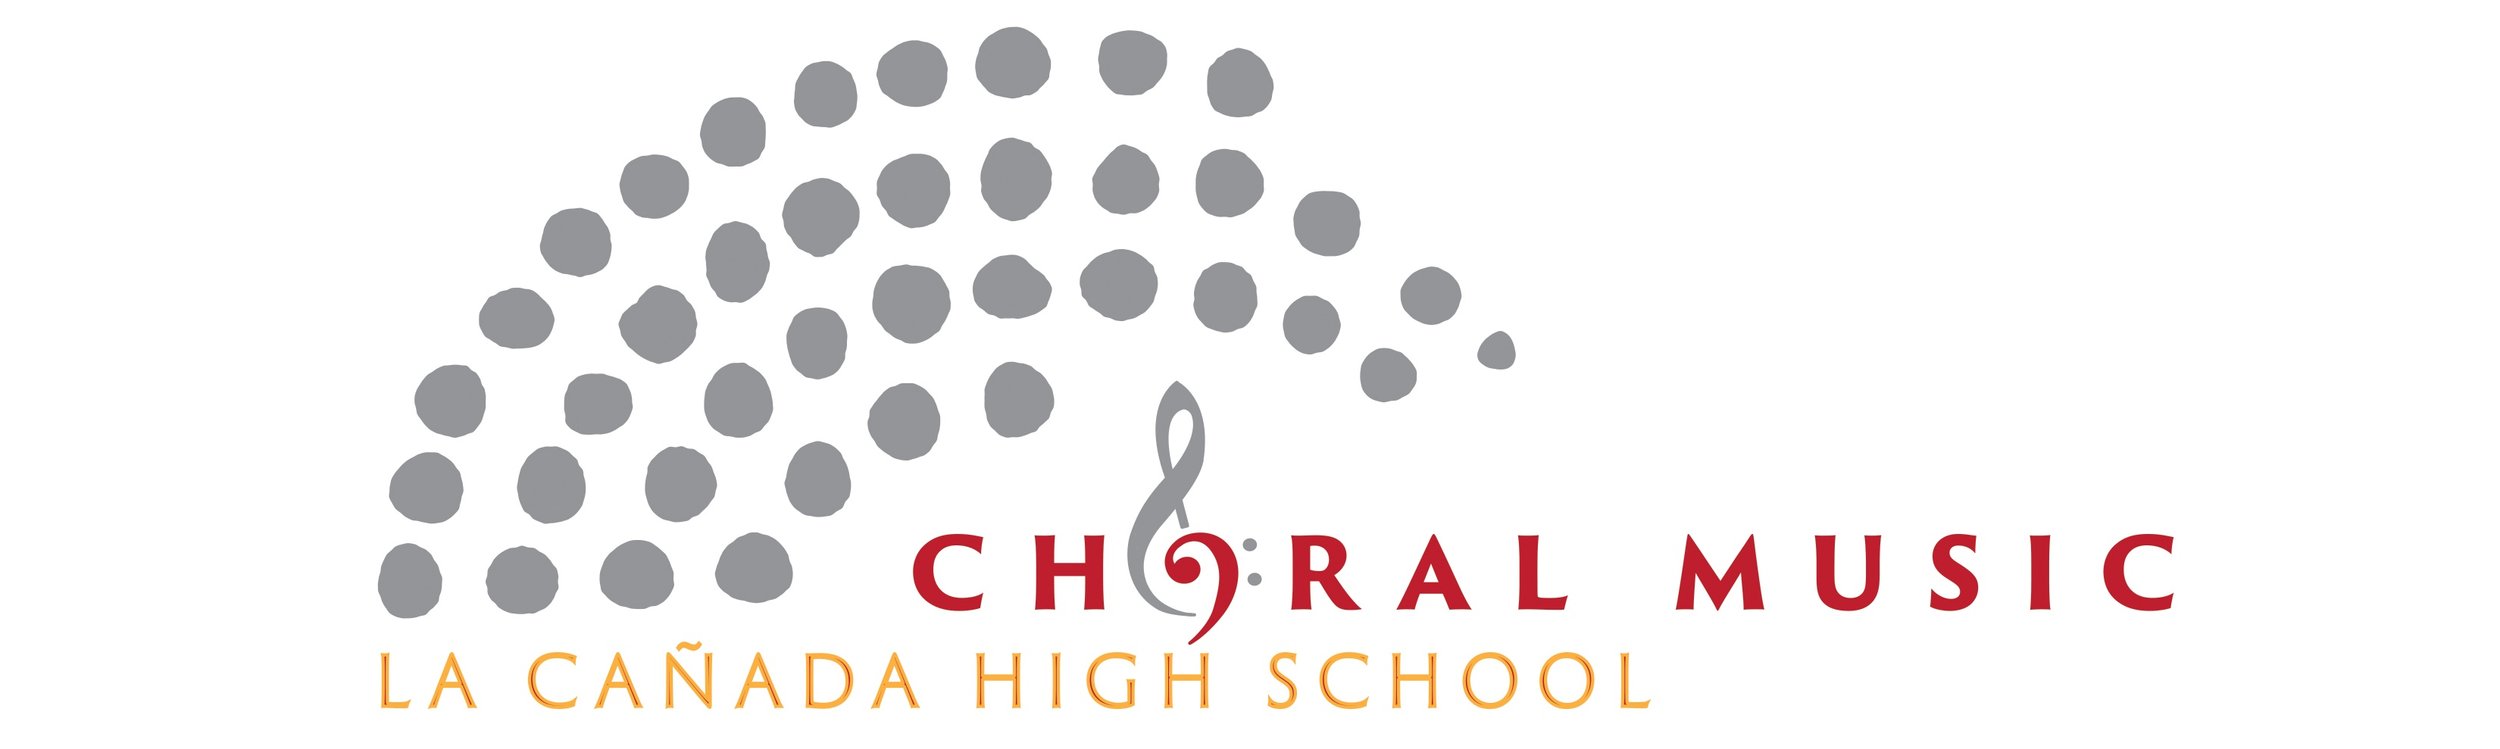 La Cañada High School Choral Parents